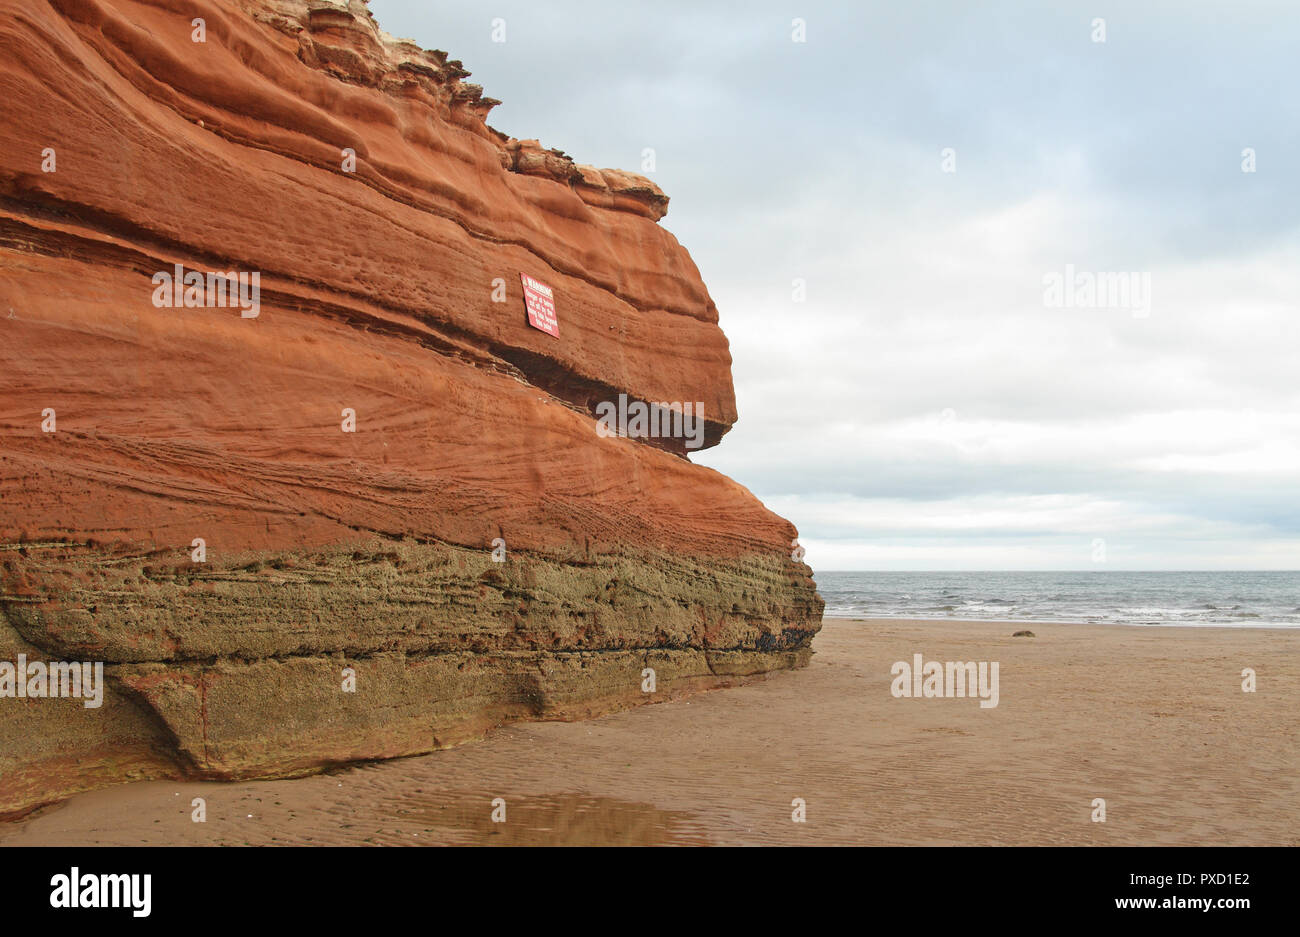 Triassic desert sandstones and mudstones, Orcombe Point, Exmouth, Devon, England, UK Stock Photo